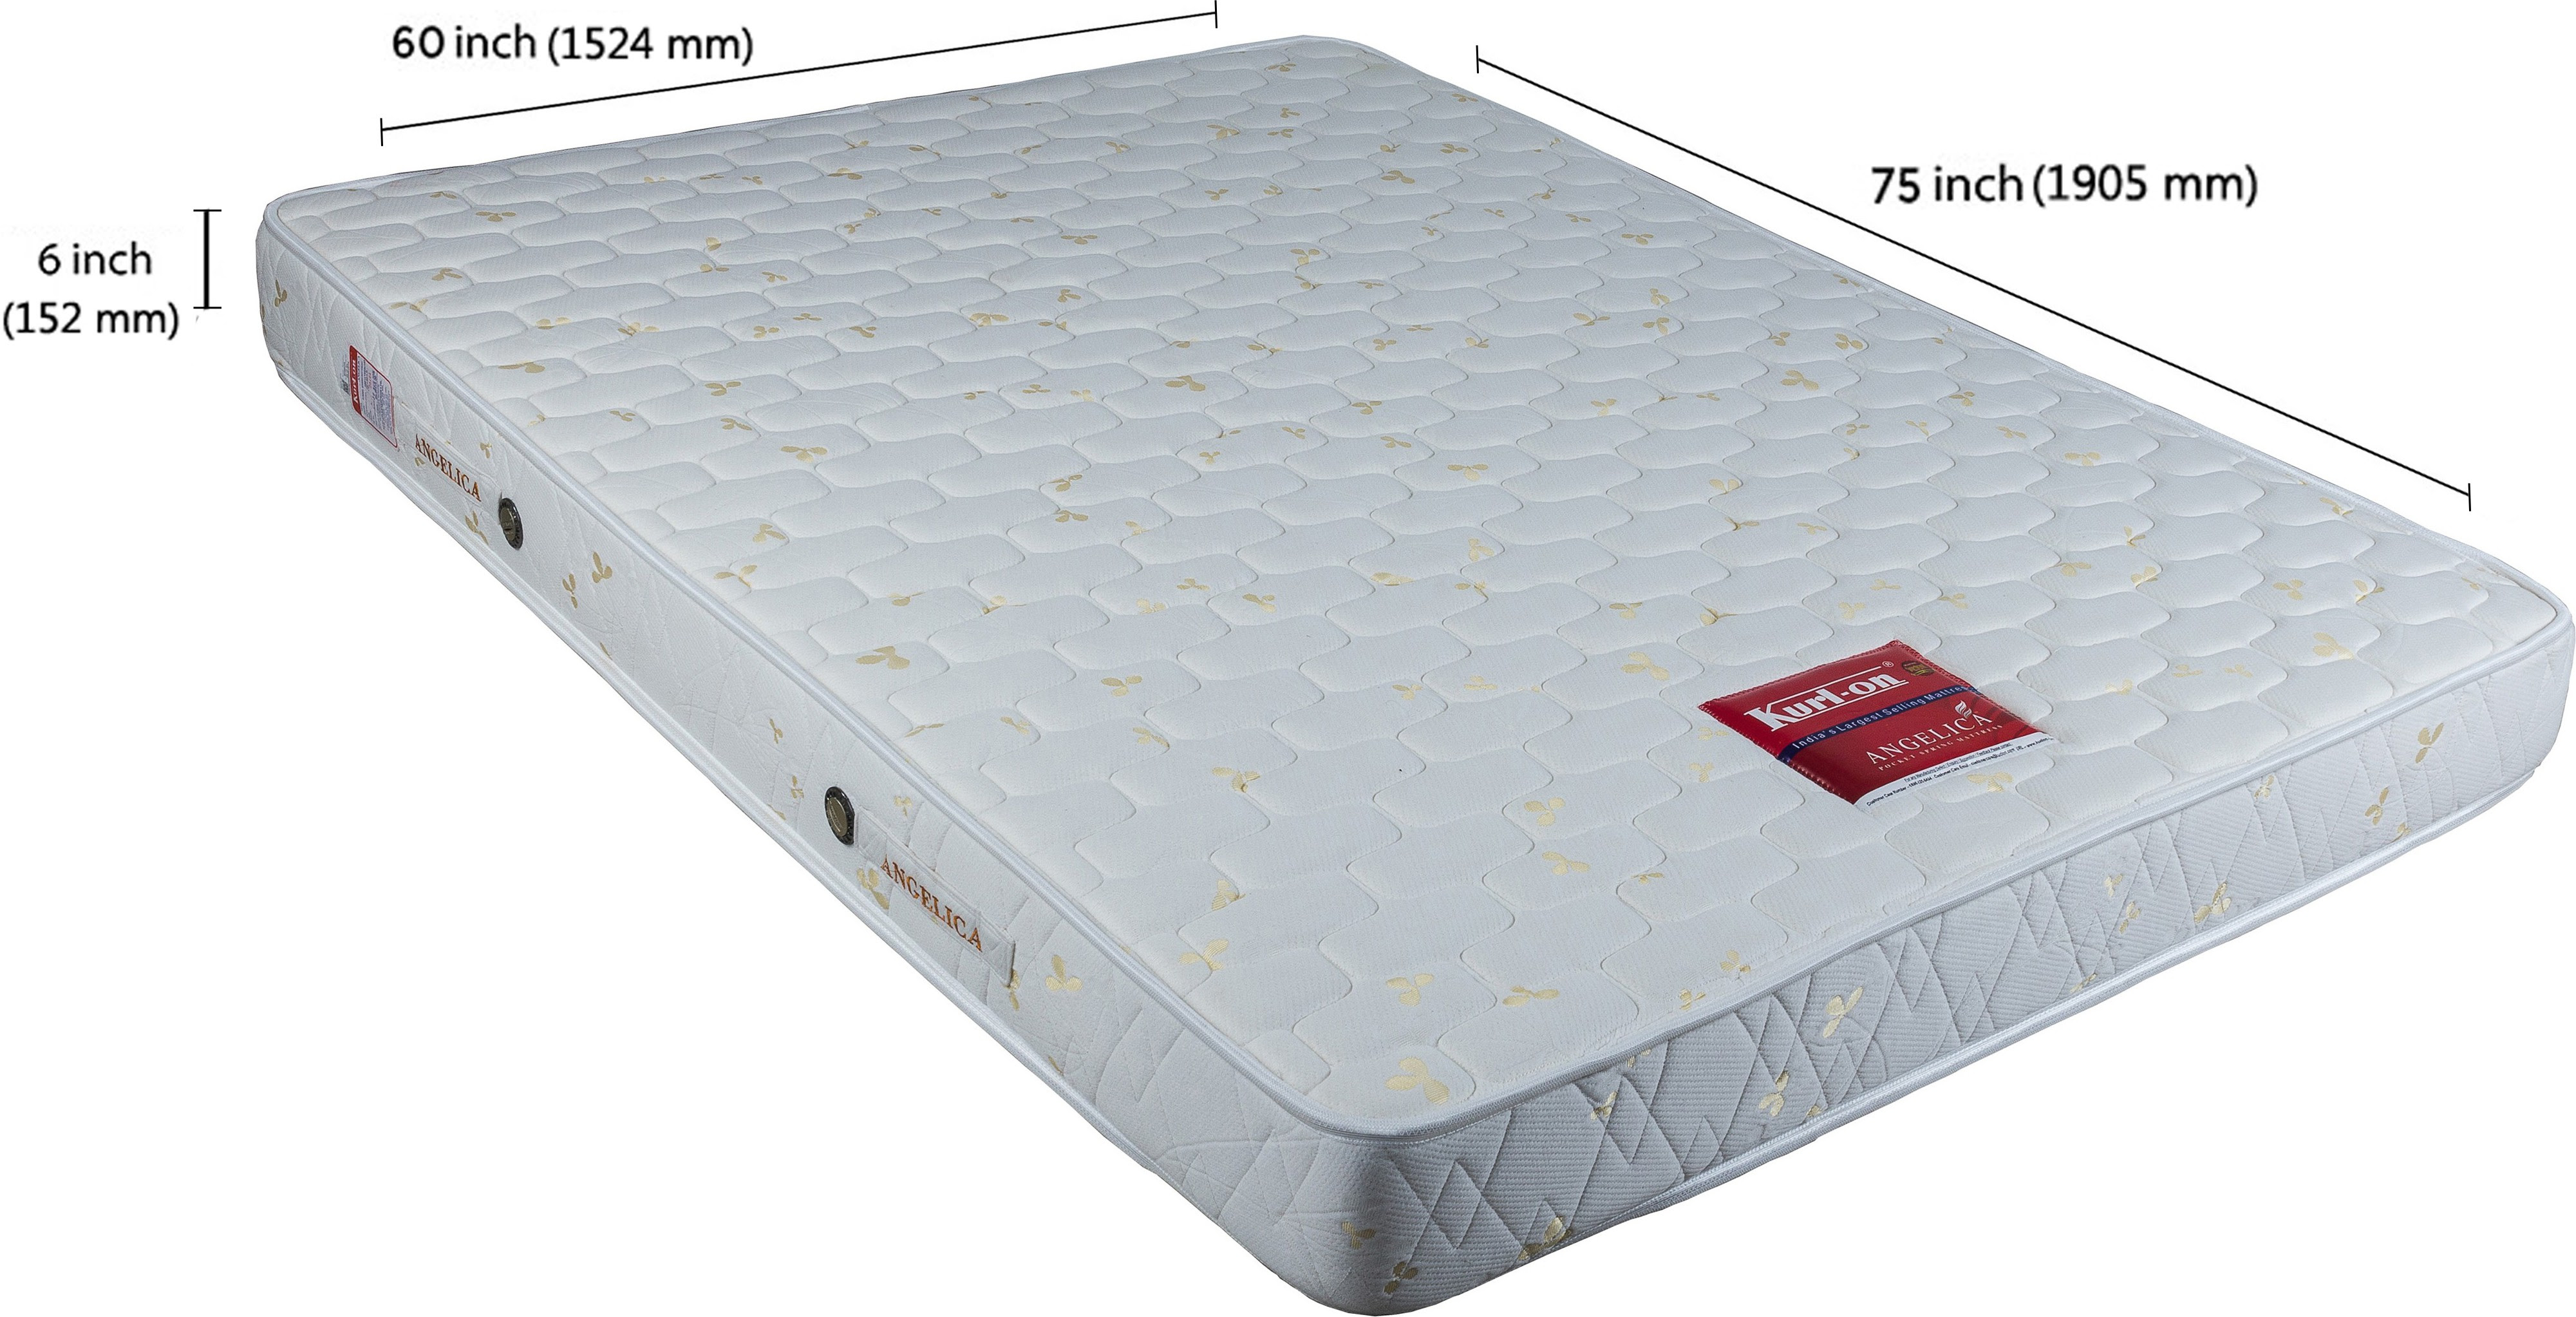 kurlon mattress king size